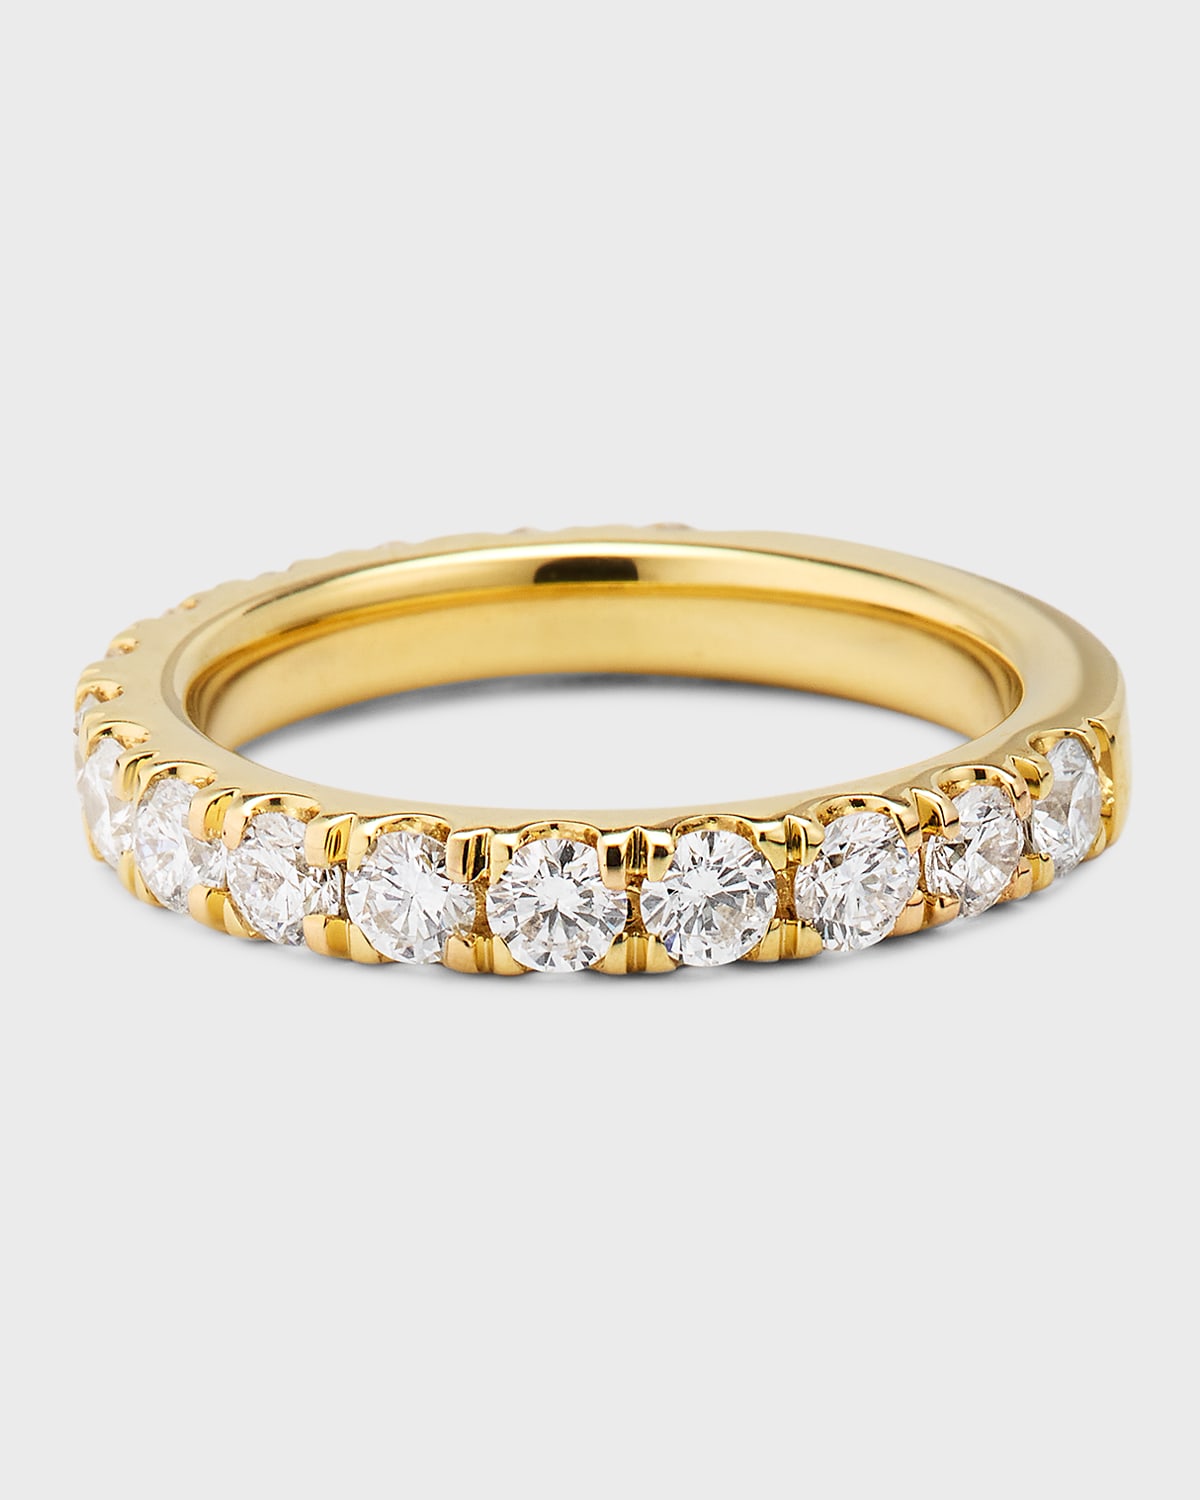 Lab Grown Diamond 18K Yellow Gold Round-Cut Eternity Ring, Size 6, 1.4ctw